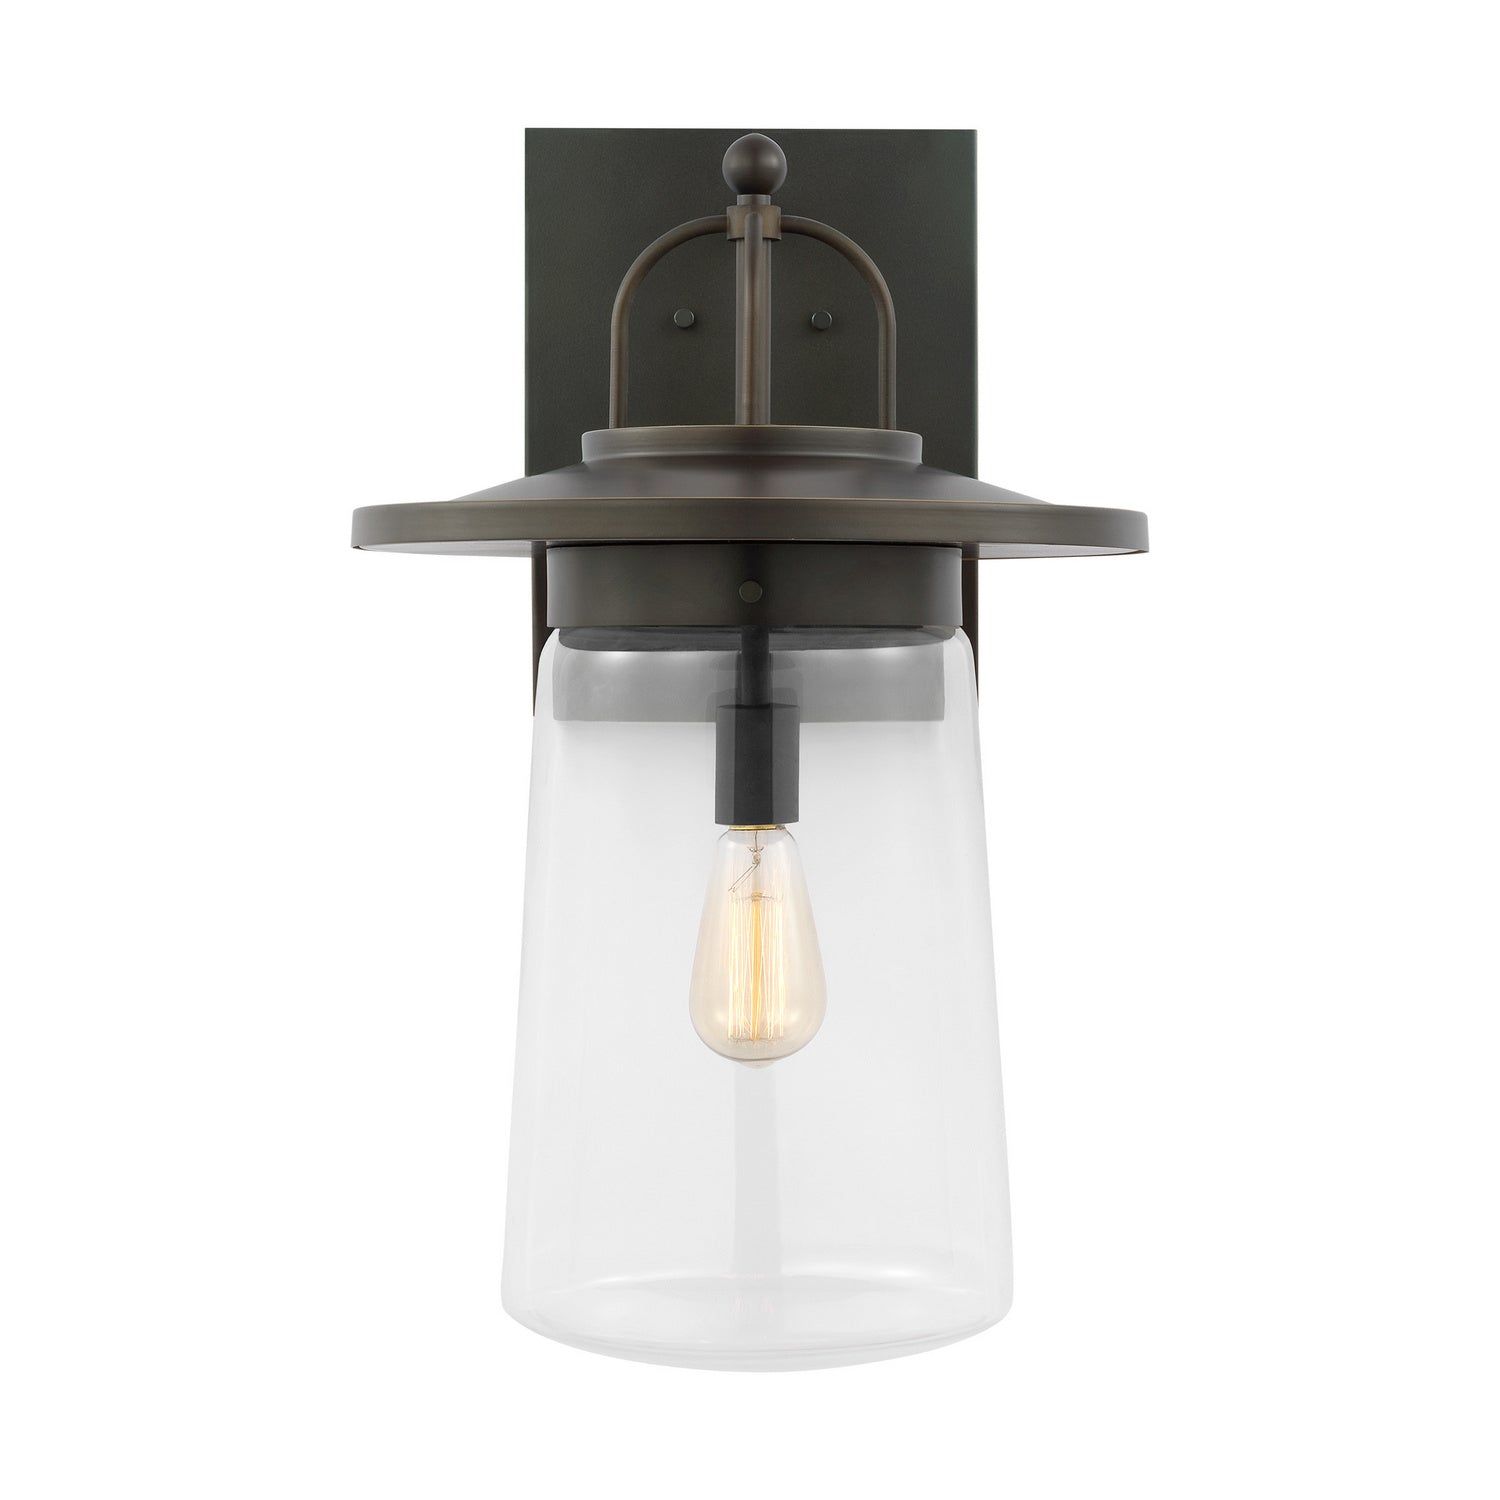 Generation Lighting Canada. - One Light Outdoor Wall Lantern - Tybee - Antique Bronze- Union Lighting Luminaires Decor